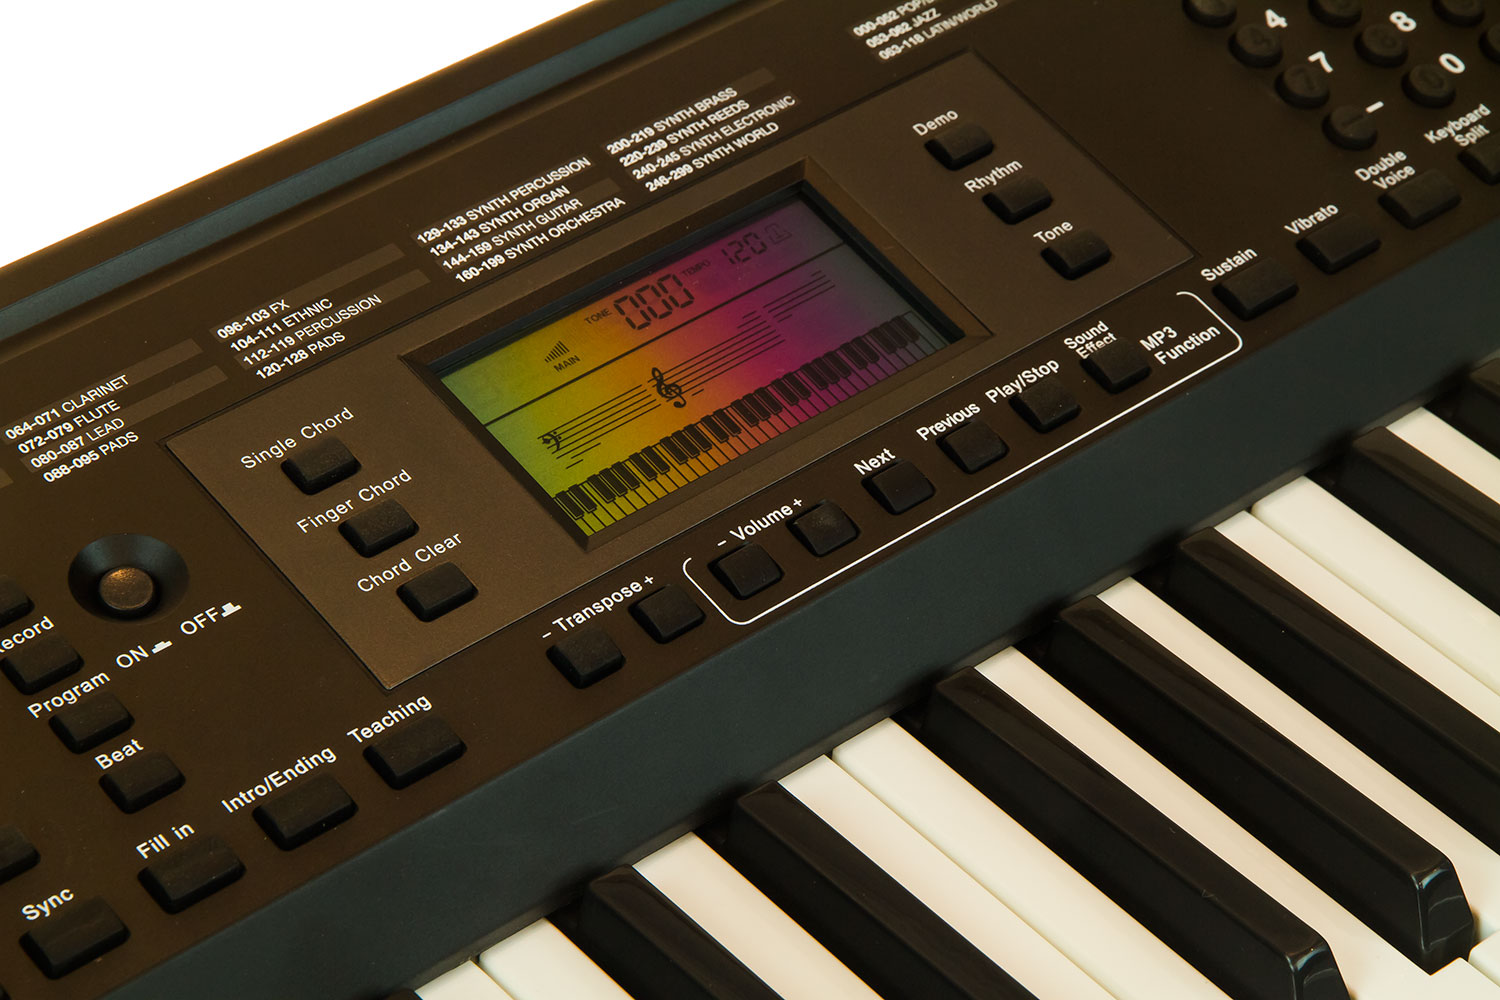 X-tone Xk100 Clavier Arrangeur - Entertainer Keyboard - Variation 5